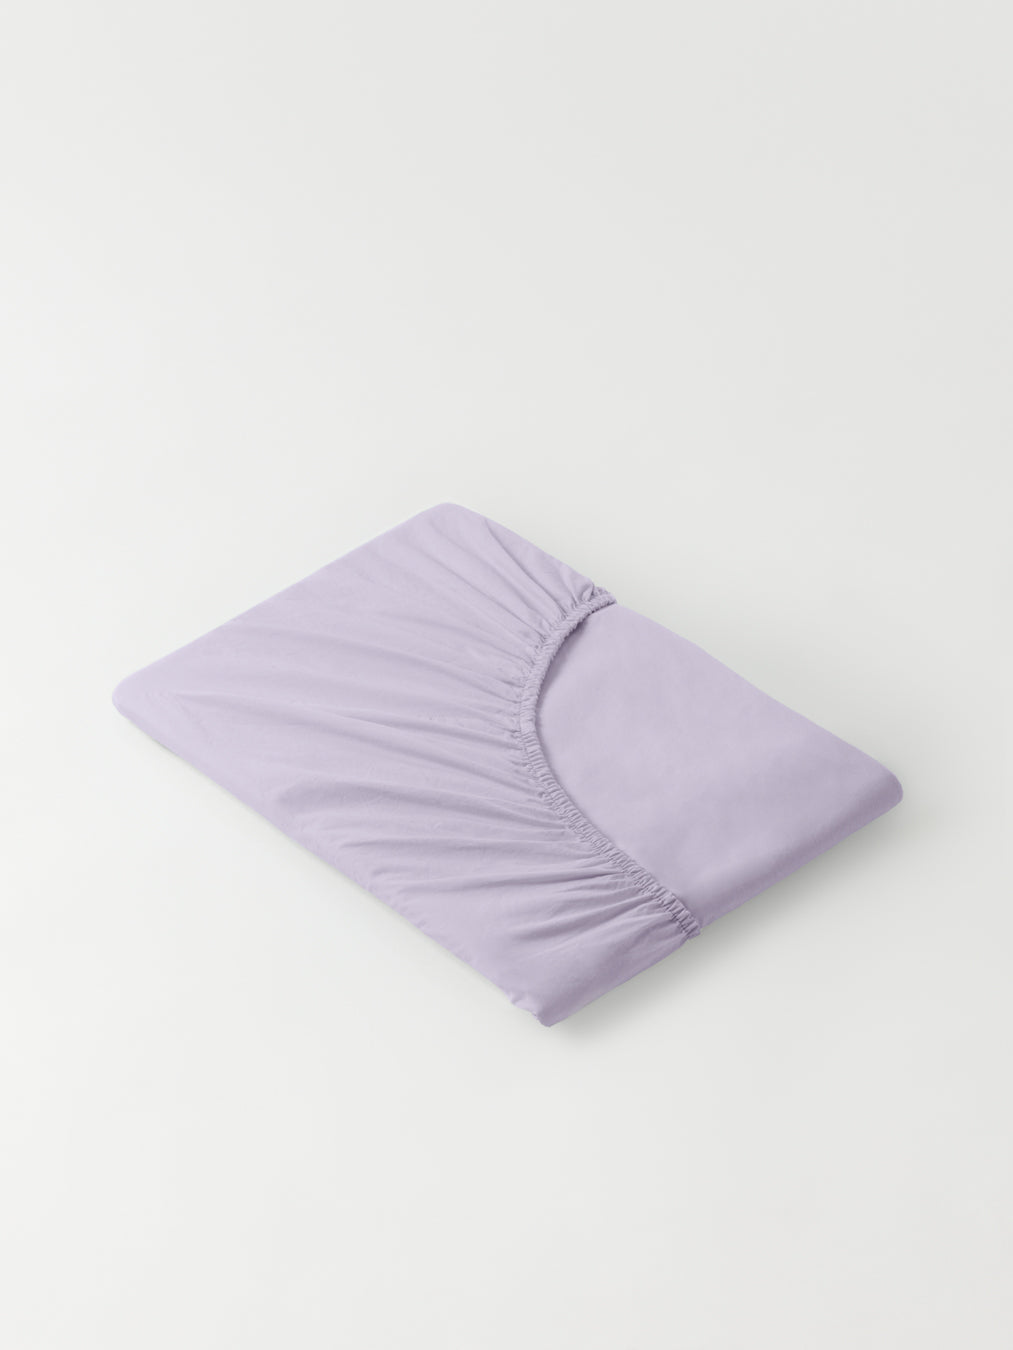 DAWN - Percale Faconlagen (160x200x35) - Lavender Mist - 100% økologisk bomuld - Lavendel